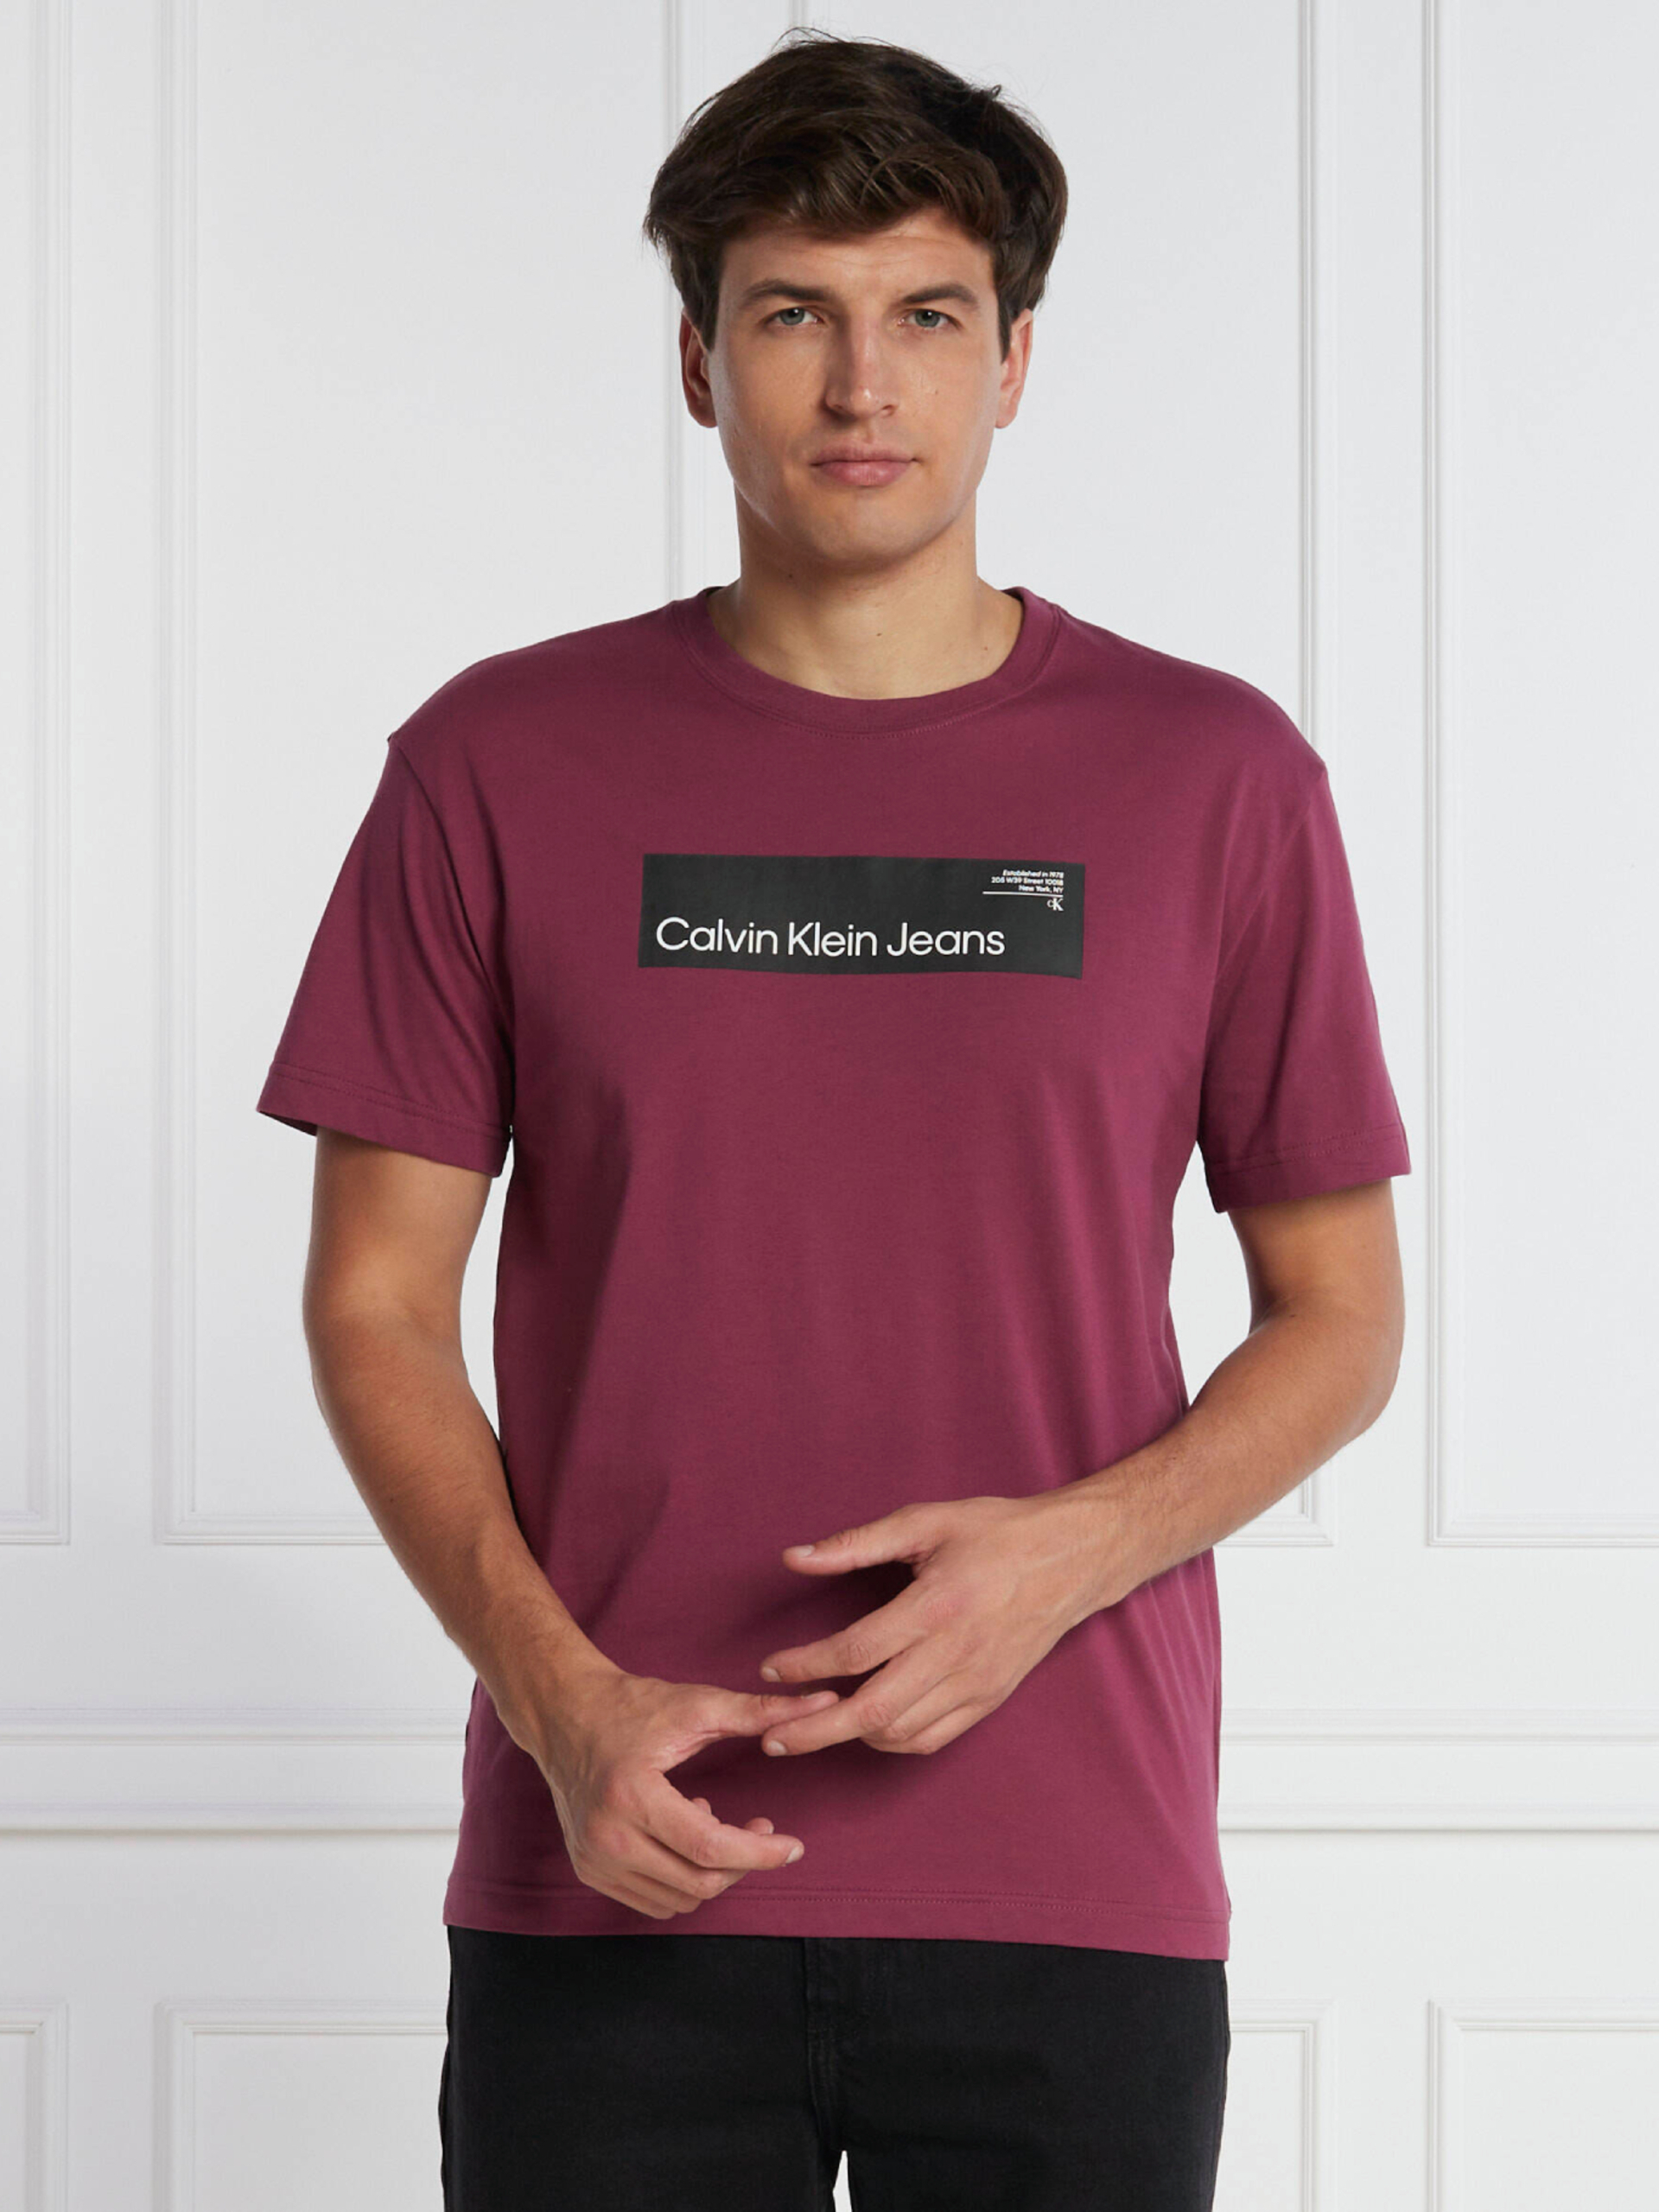 Calvin Klein pánské fialové tričko - XL (VAC)